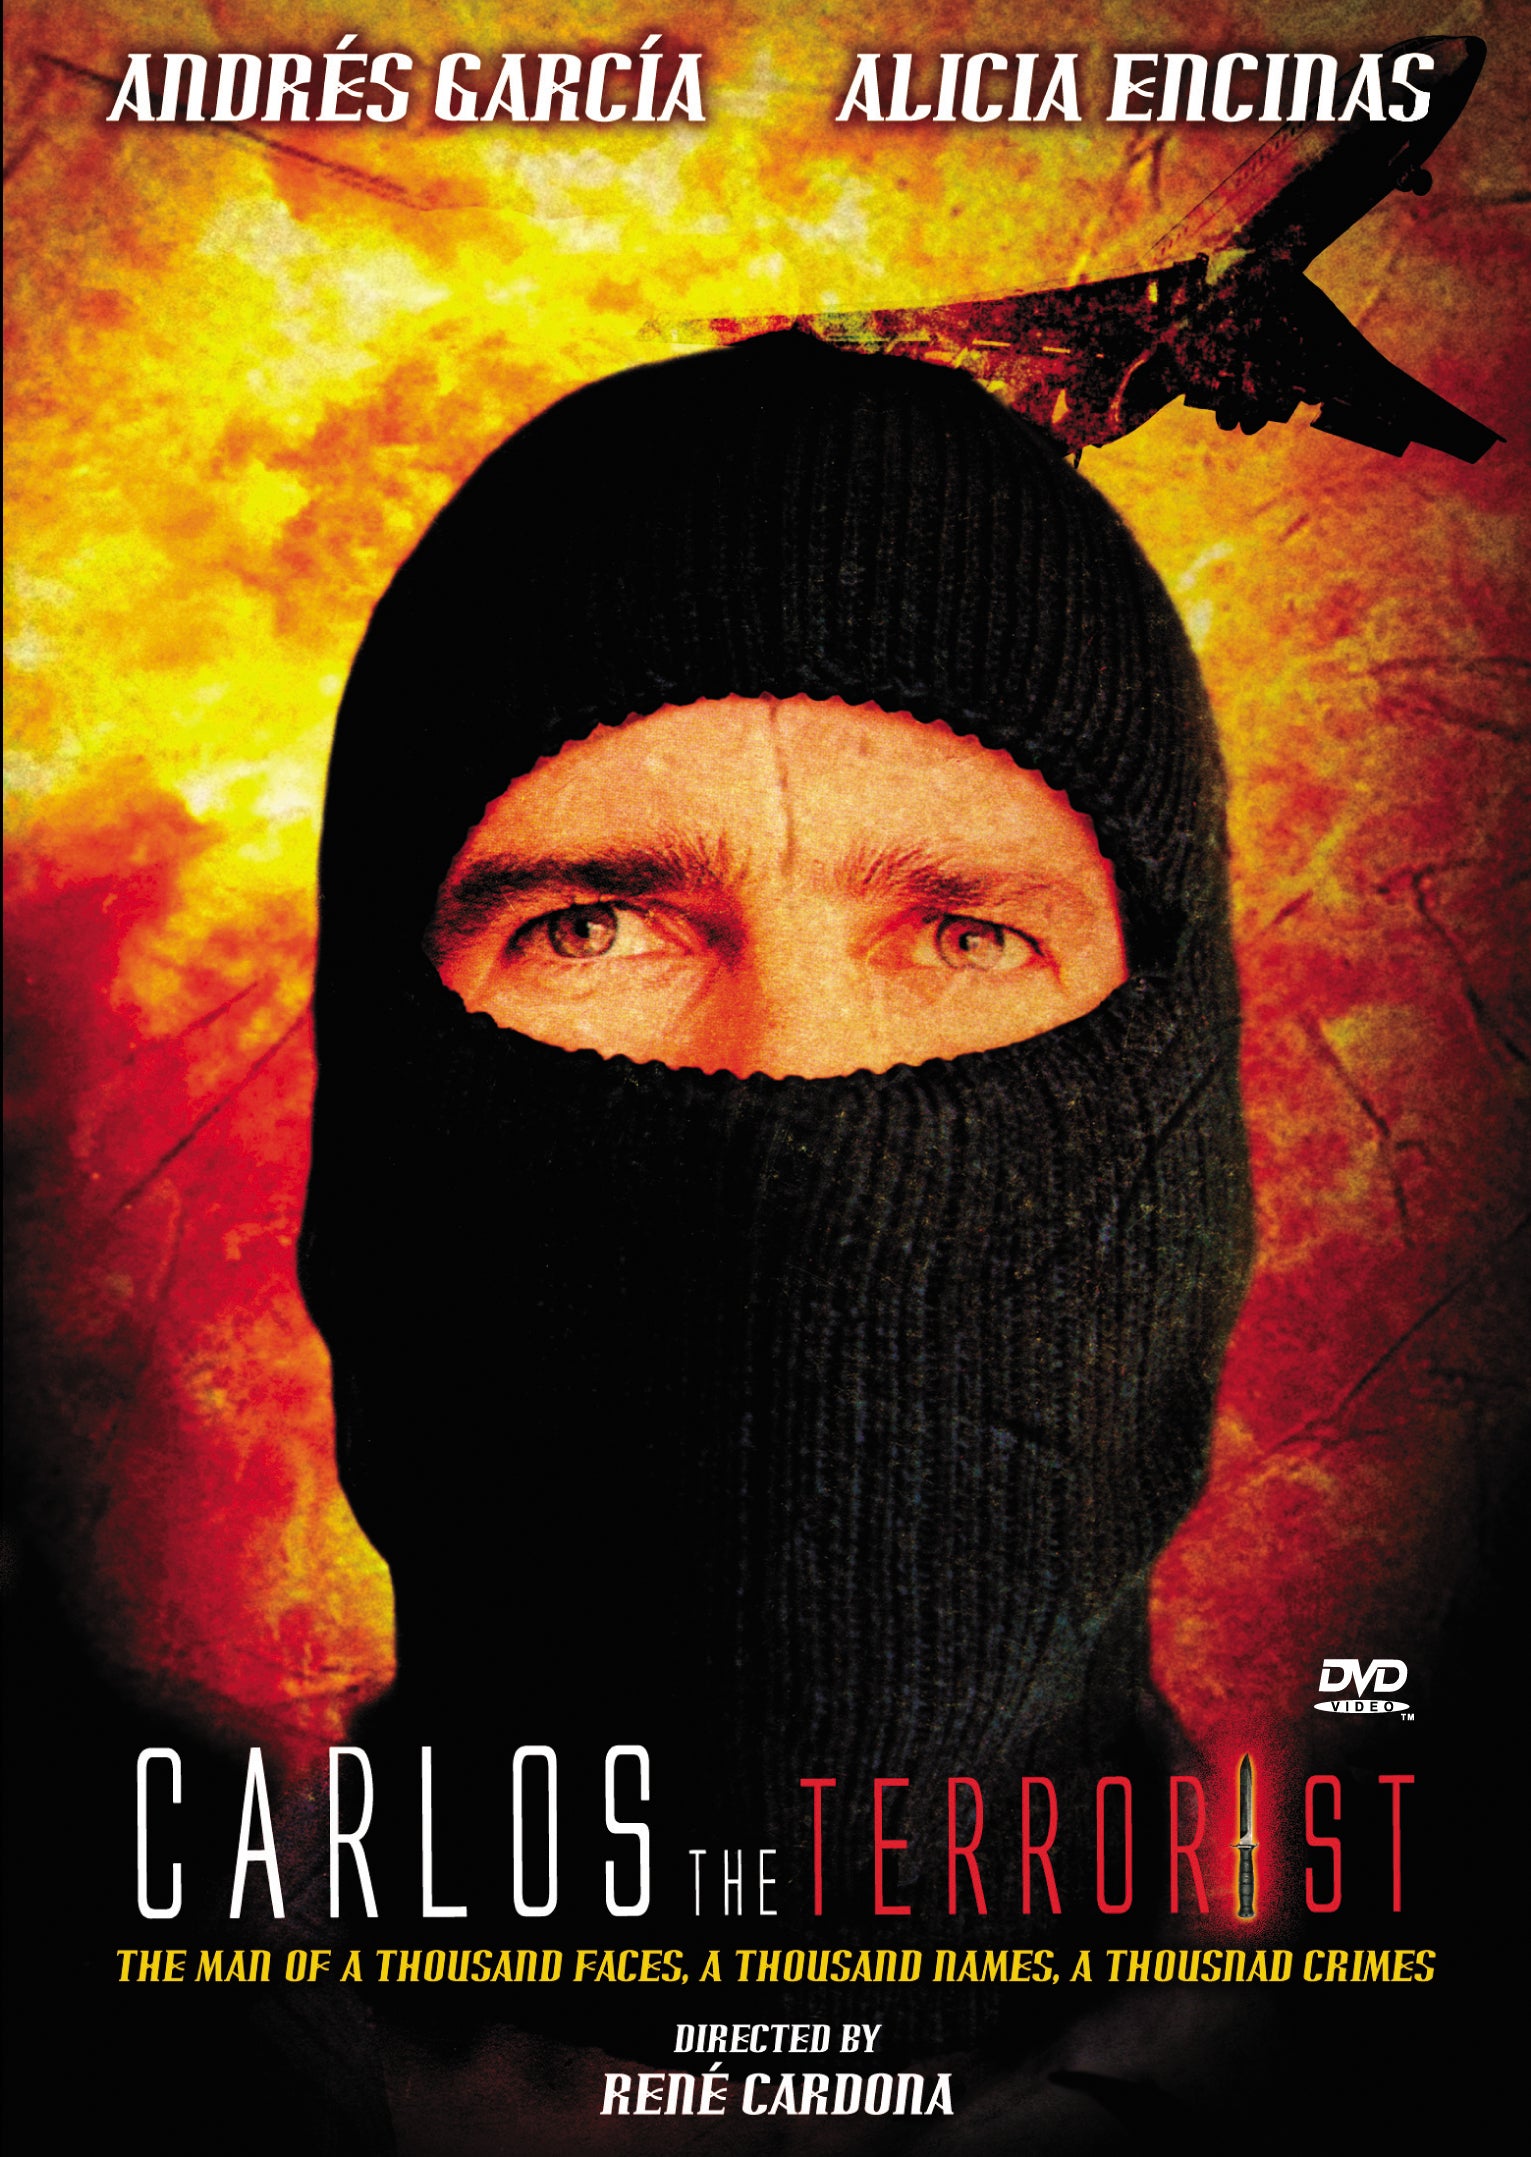 CARLOS THE TERRORIST DVD